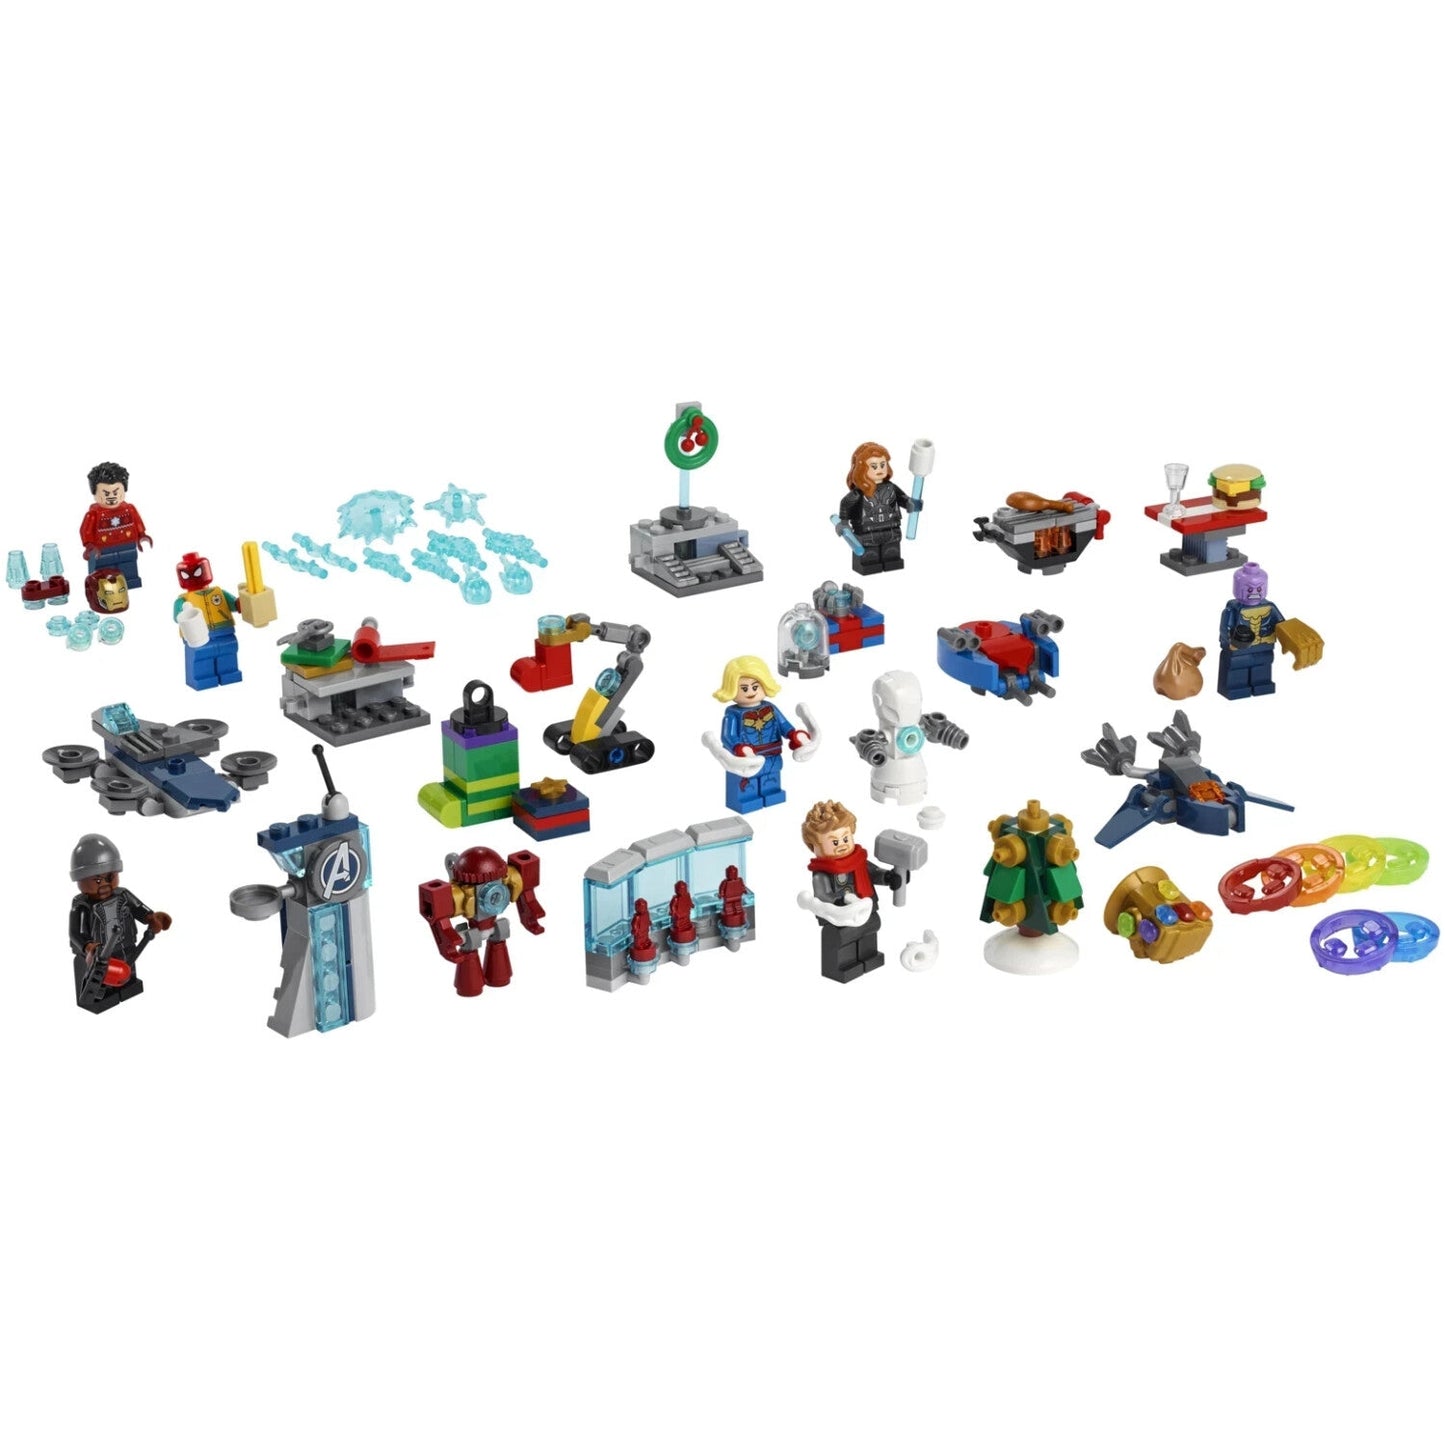 LEGO 76196 Marvel Avengers Adventskalender 2021 Weihnachten